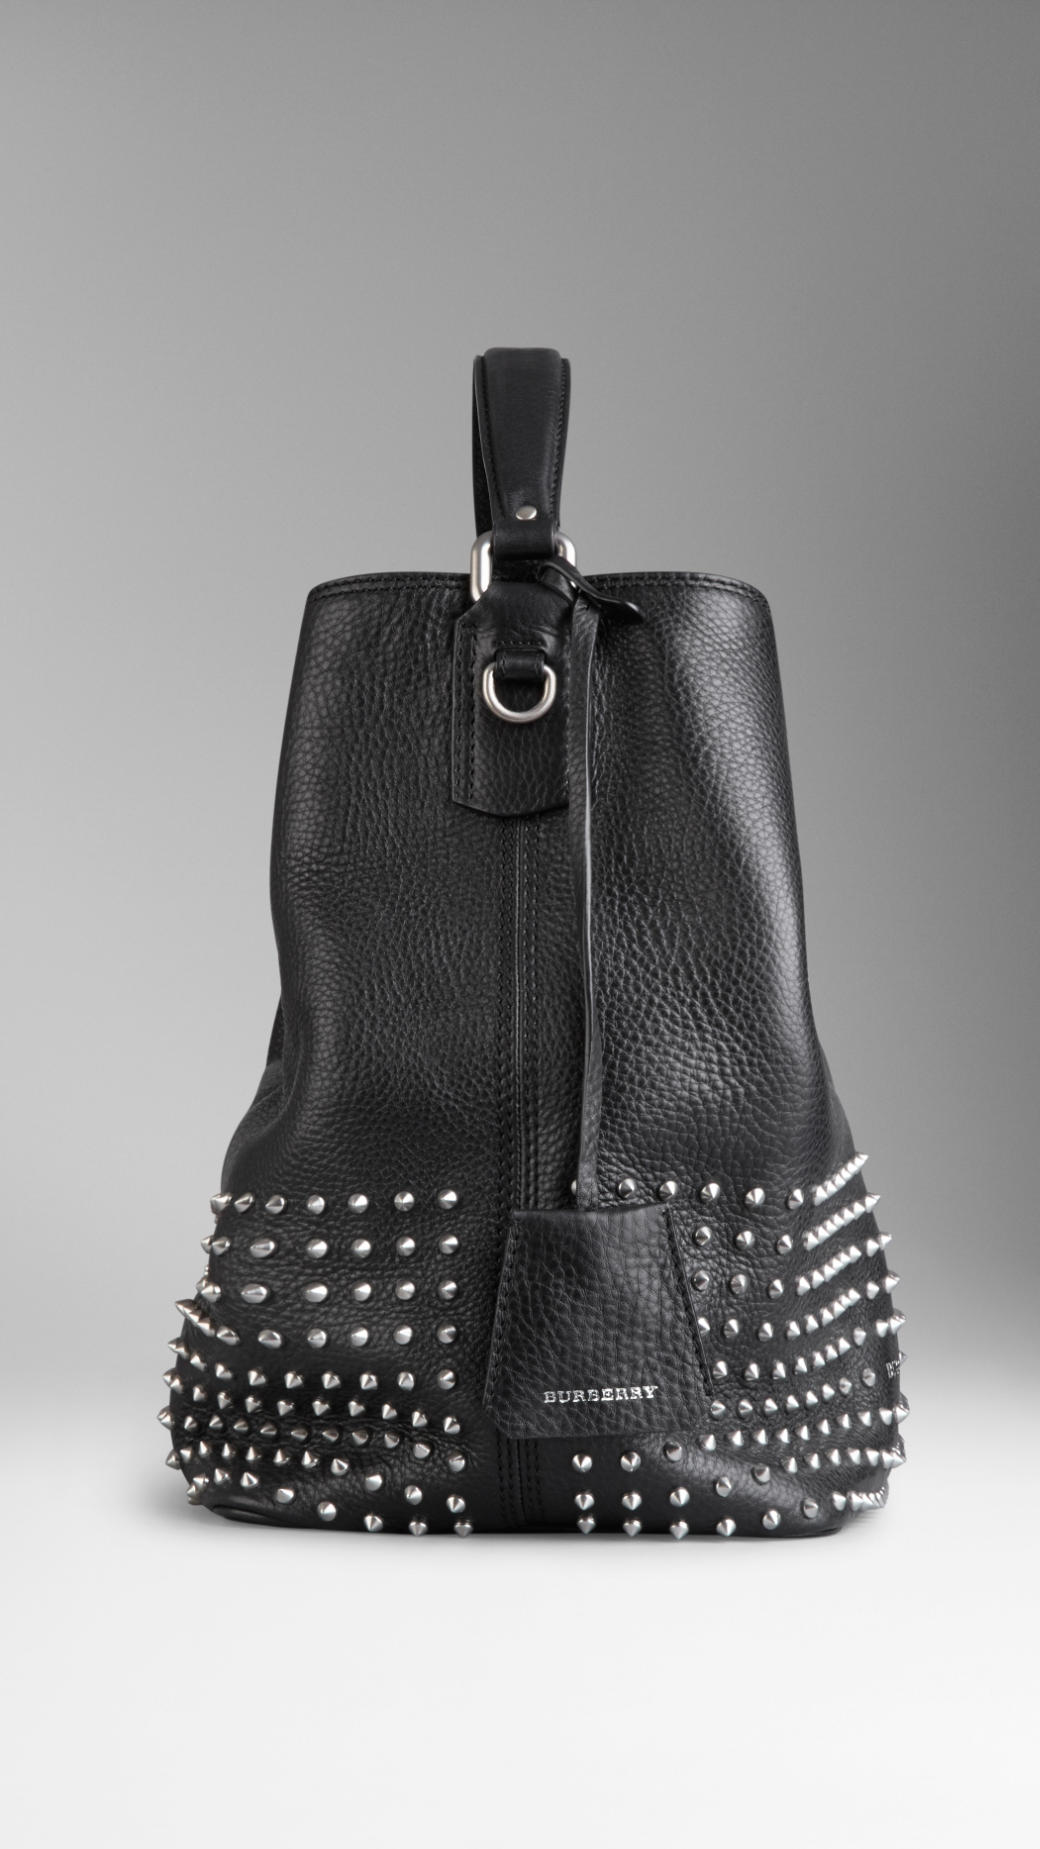 Lyst - Burberry Medium Studded Leather Hobo Bag in Black